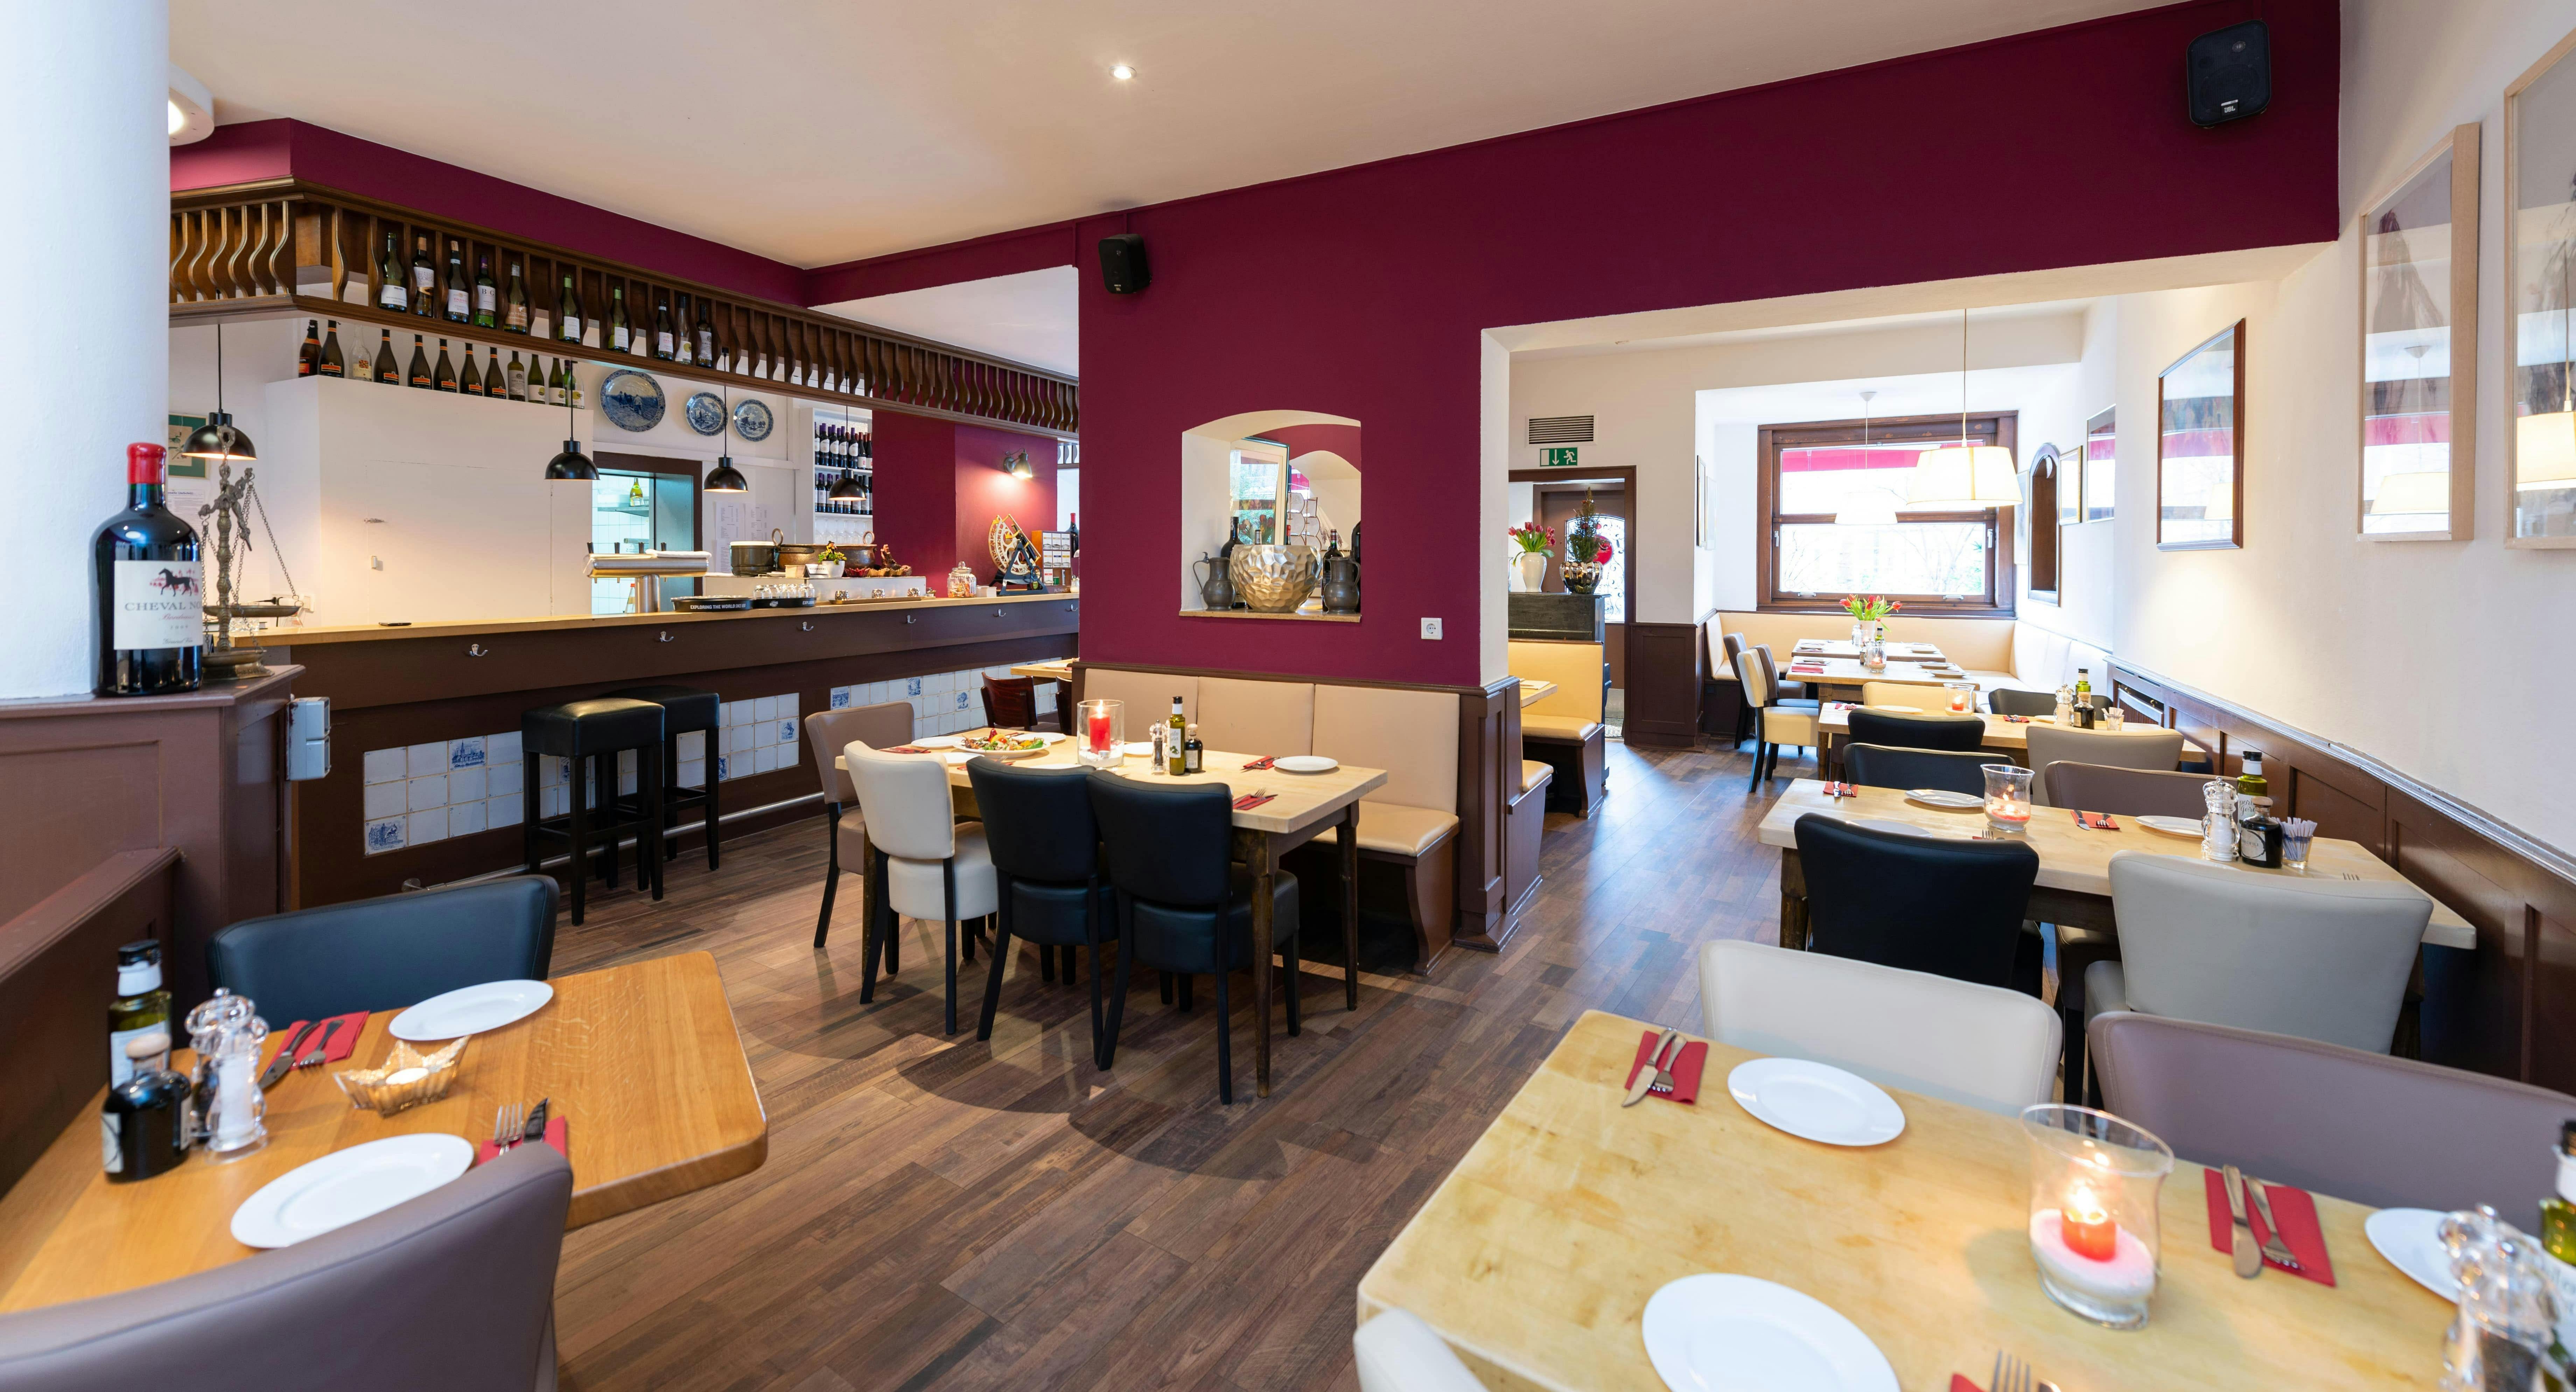 Photo of restaurant Saban's Cafe & Restaurant in Pempelfort, Dusseldorf